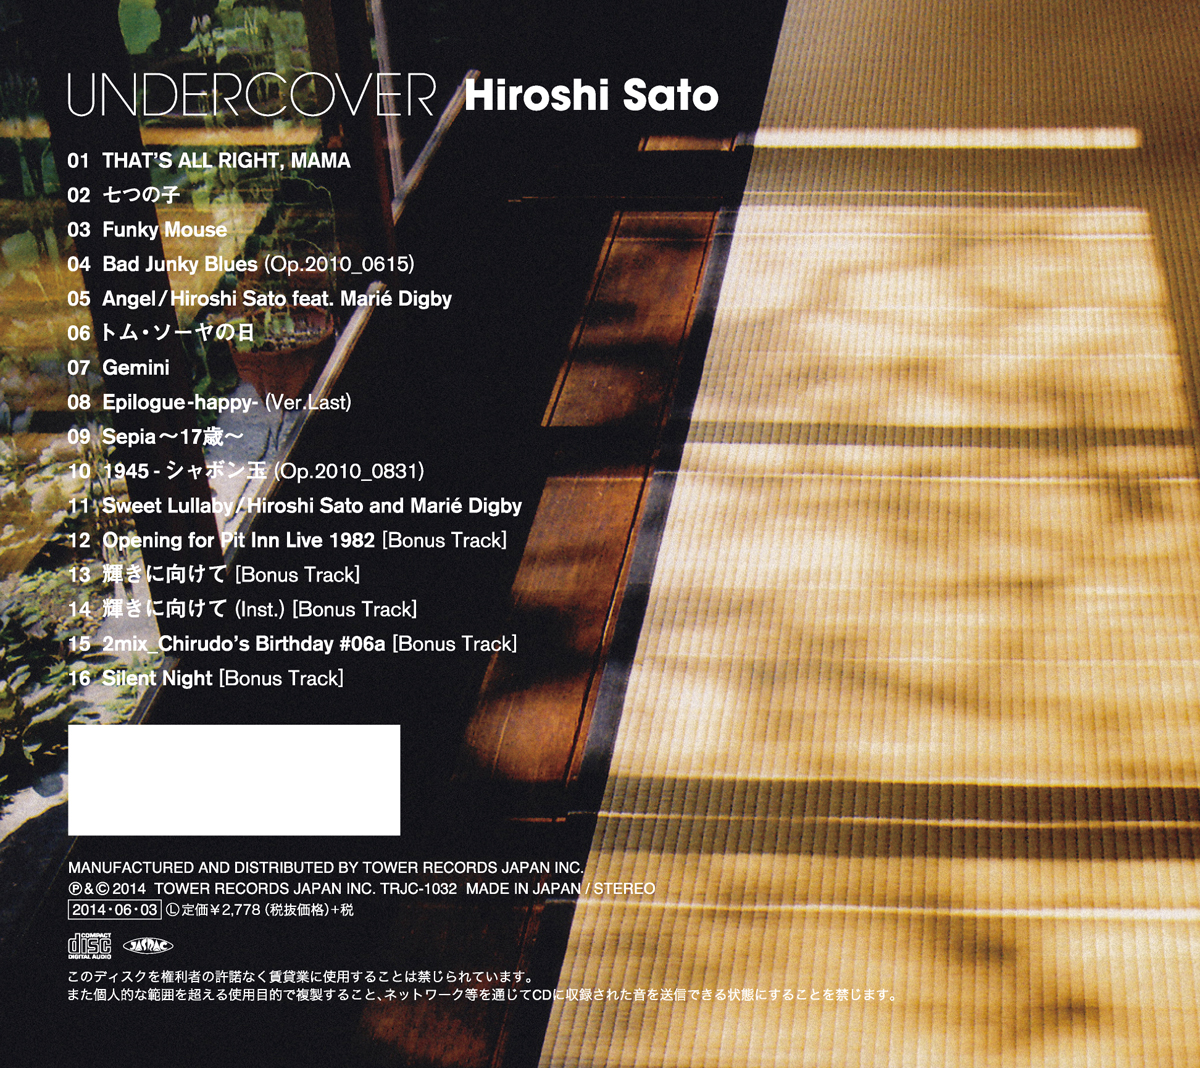 Hiroshi Sato “Undercover”